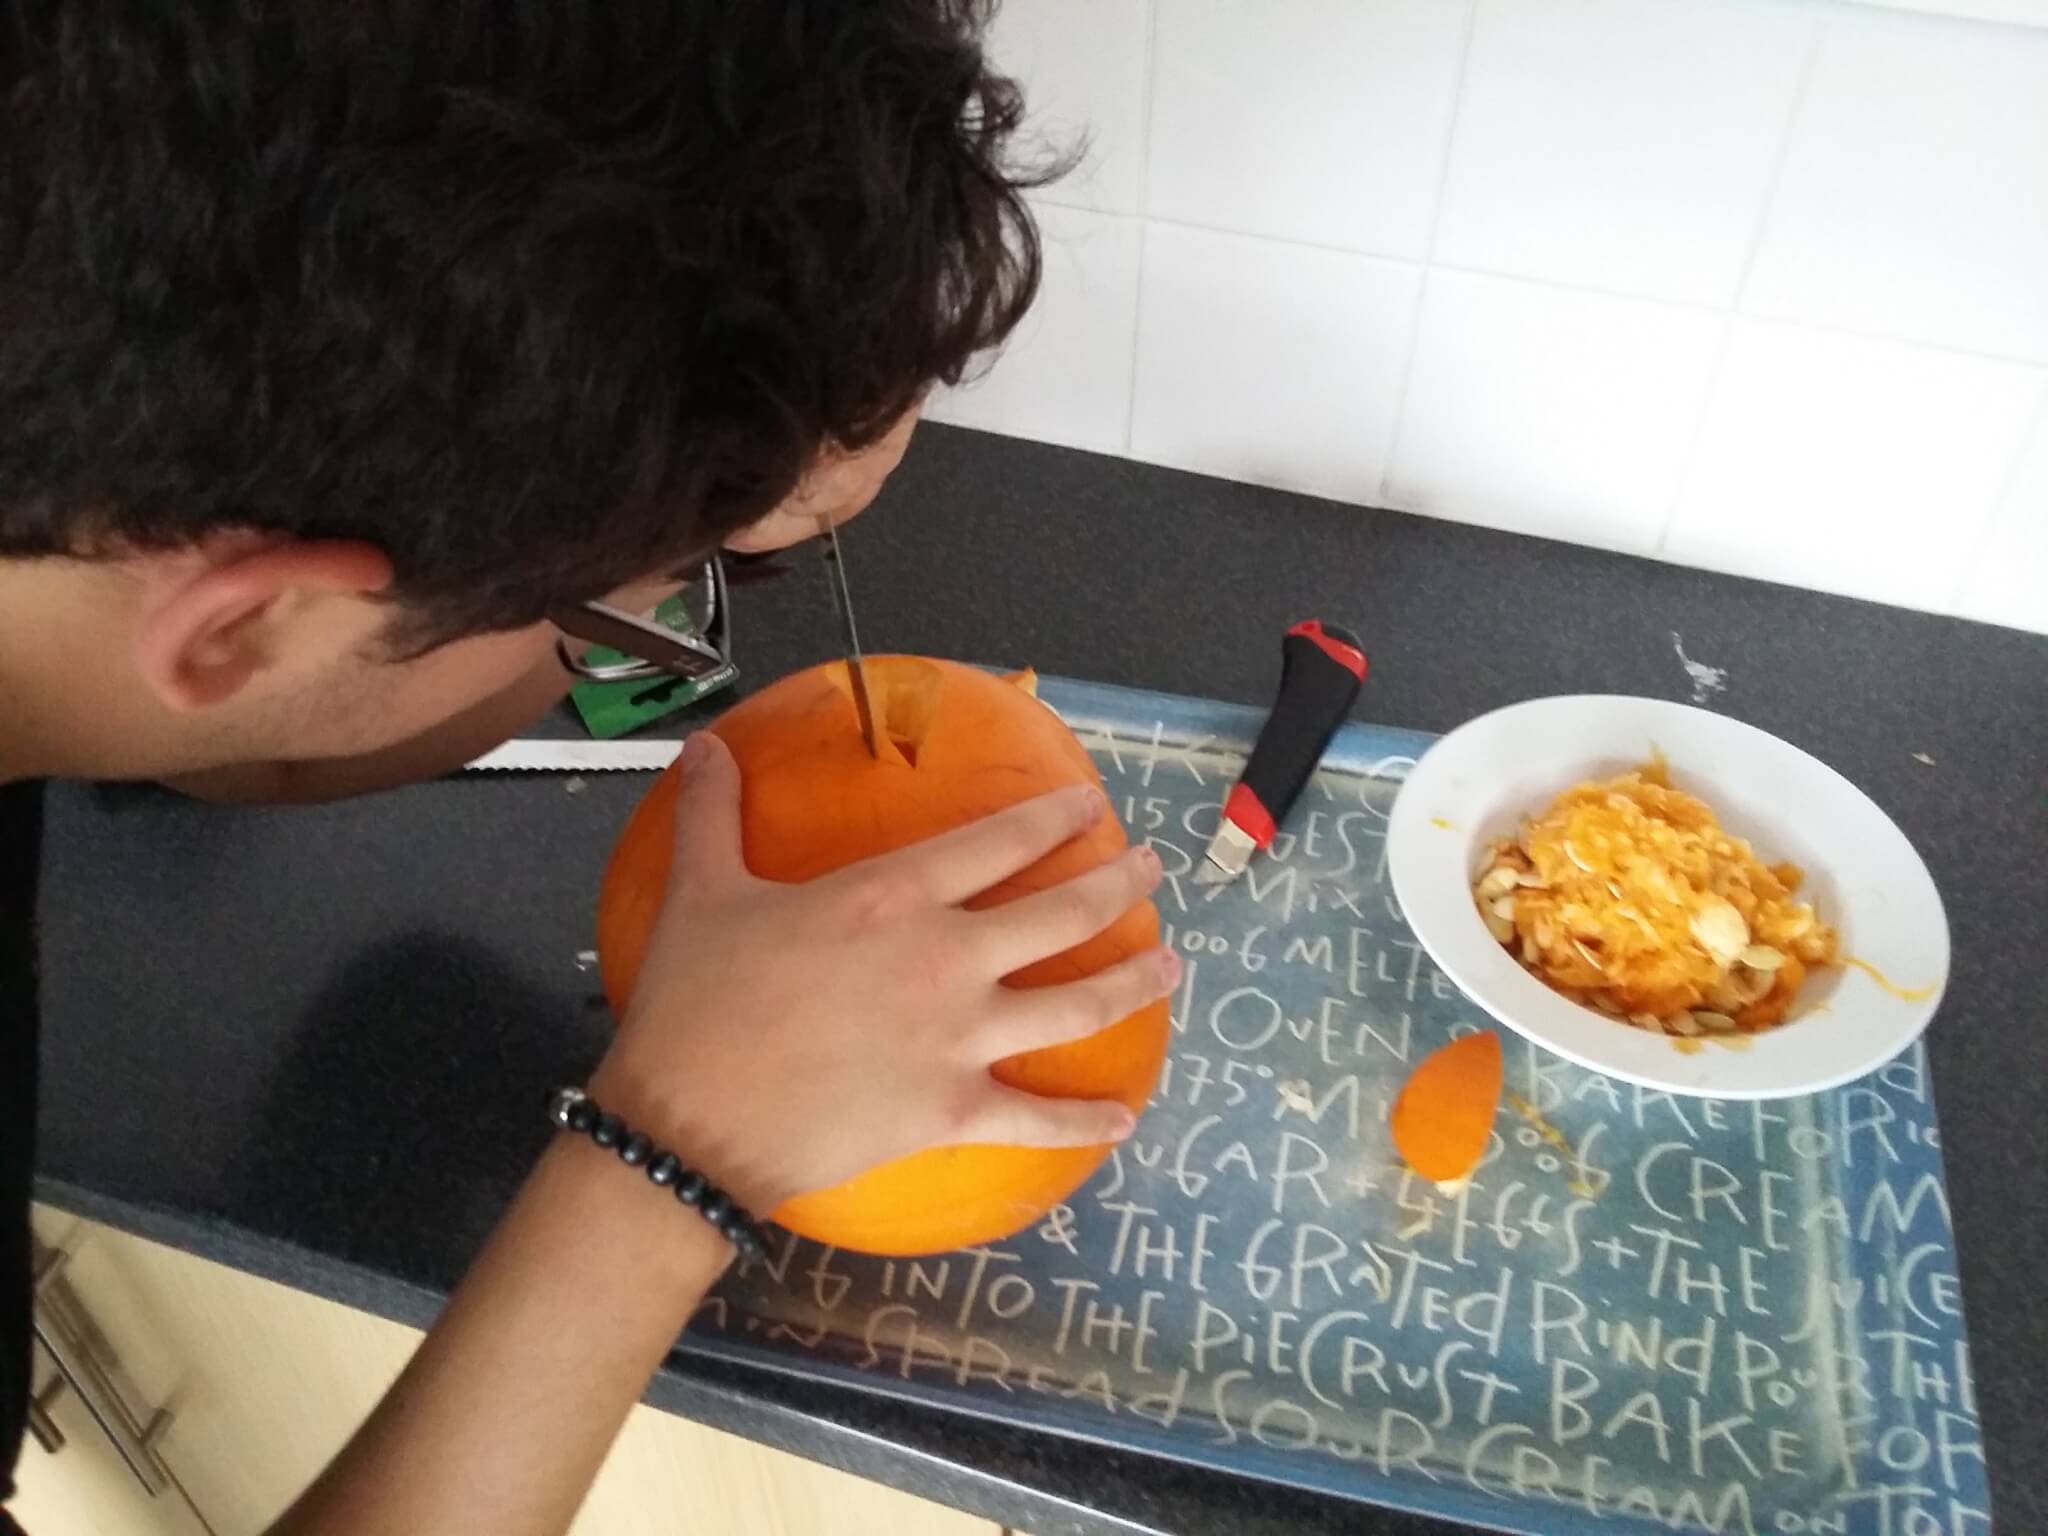 Cutting the Pumpkin